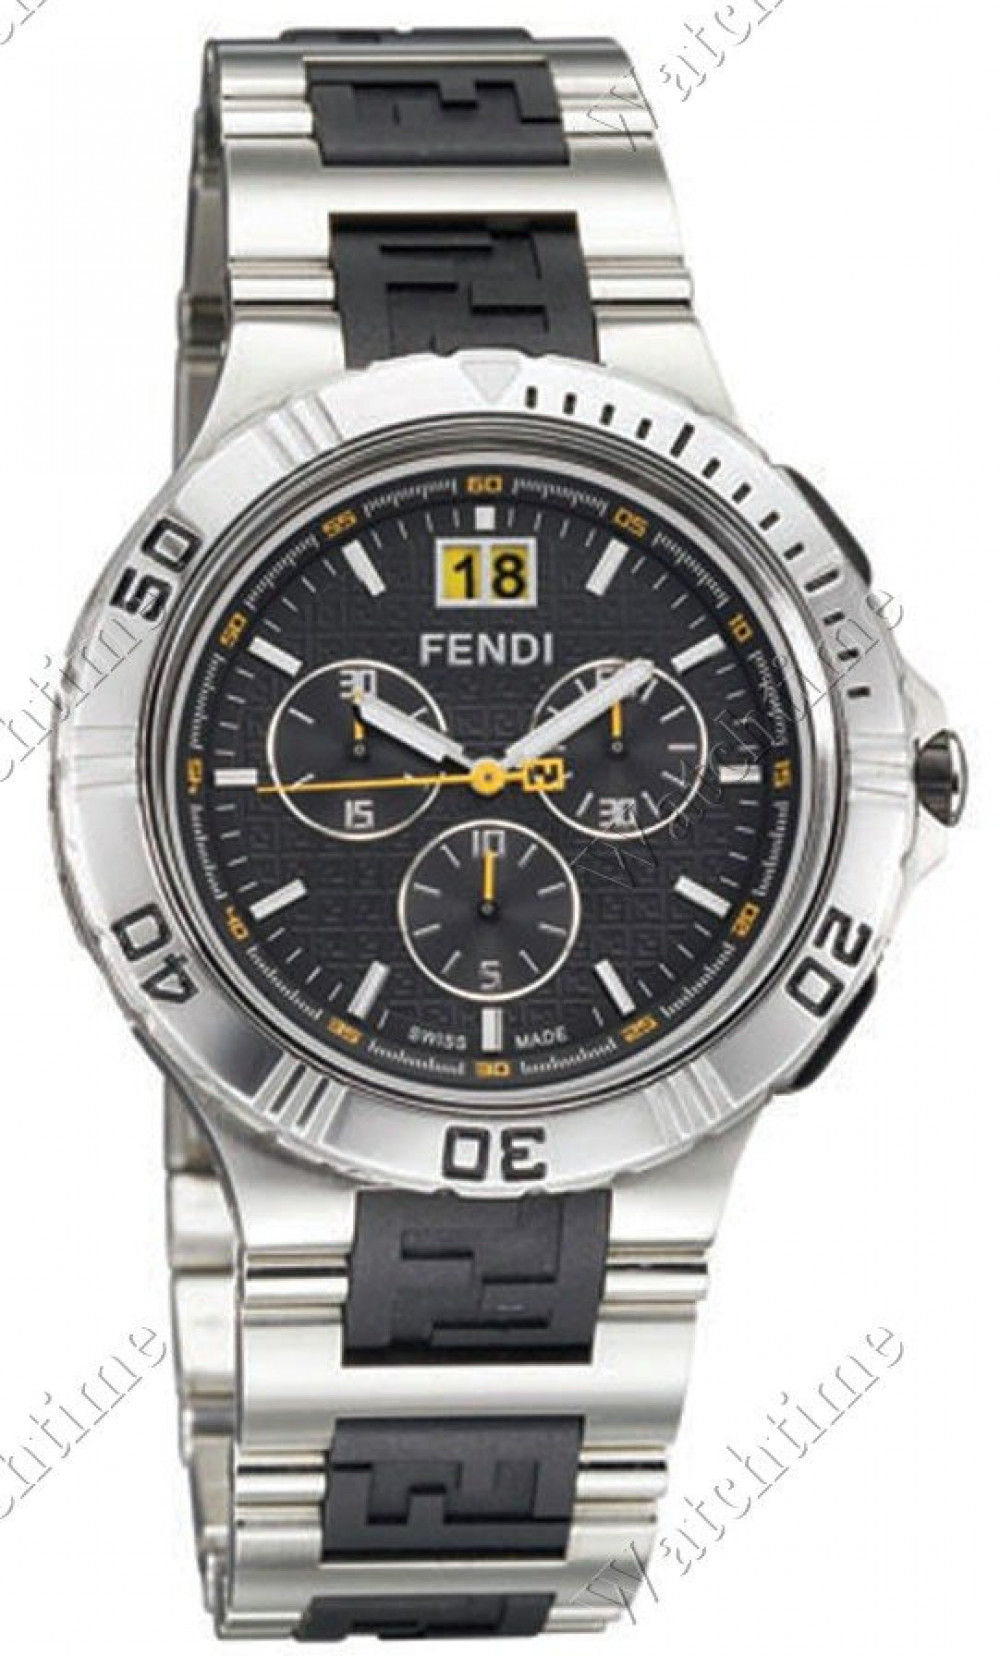 Zegarek firmy Fendi, model High Speed Chronograph